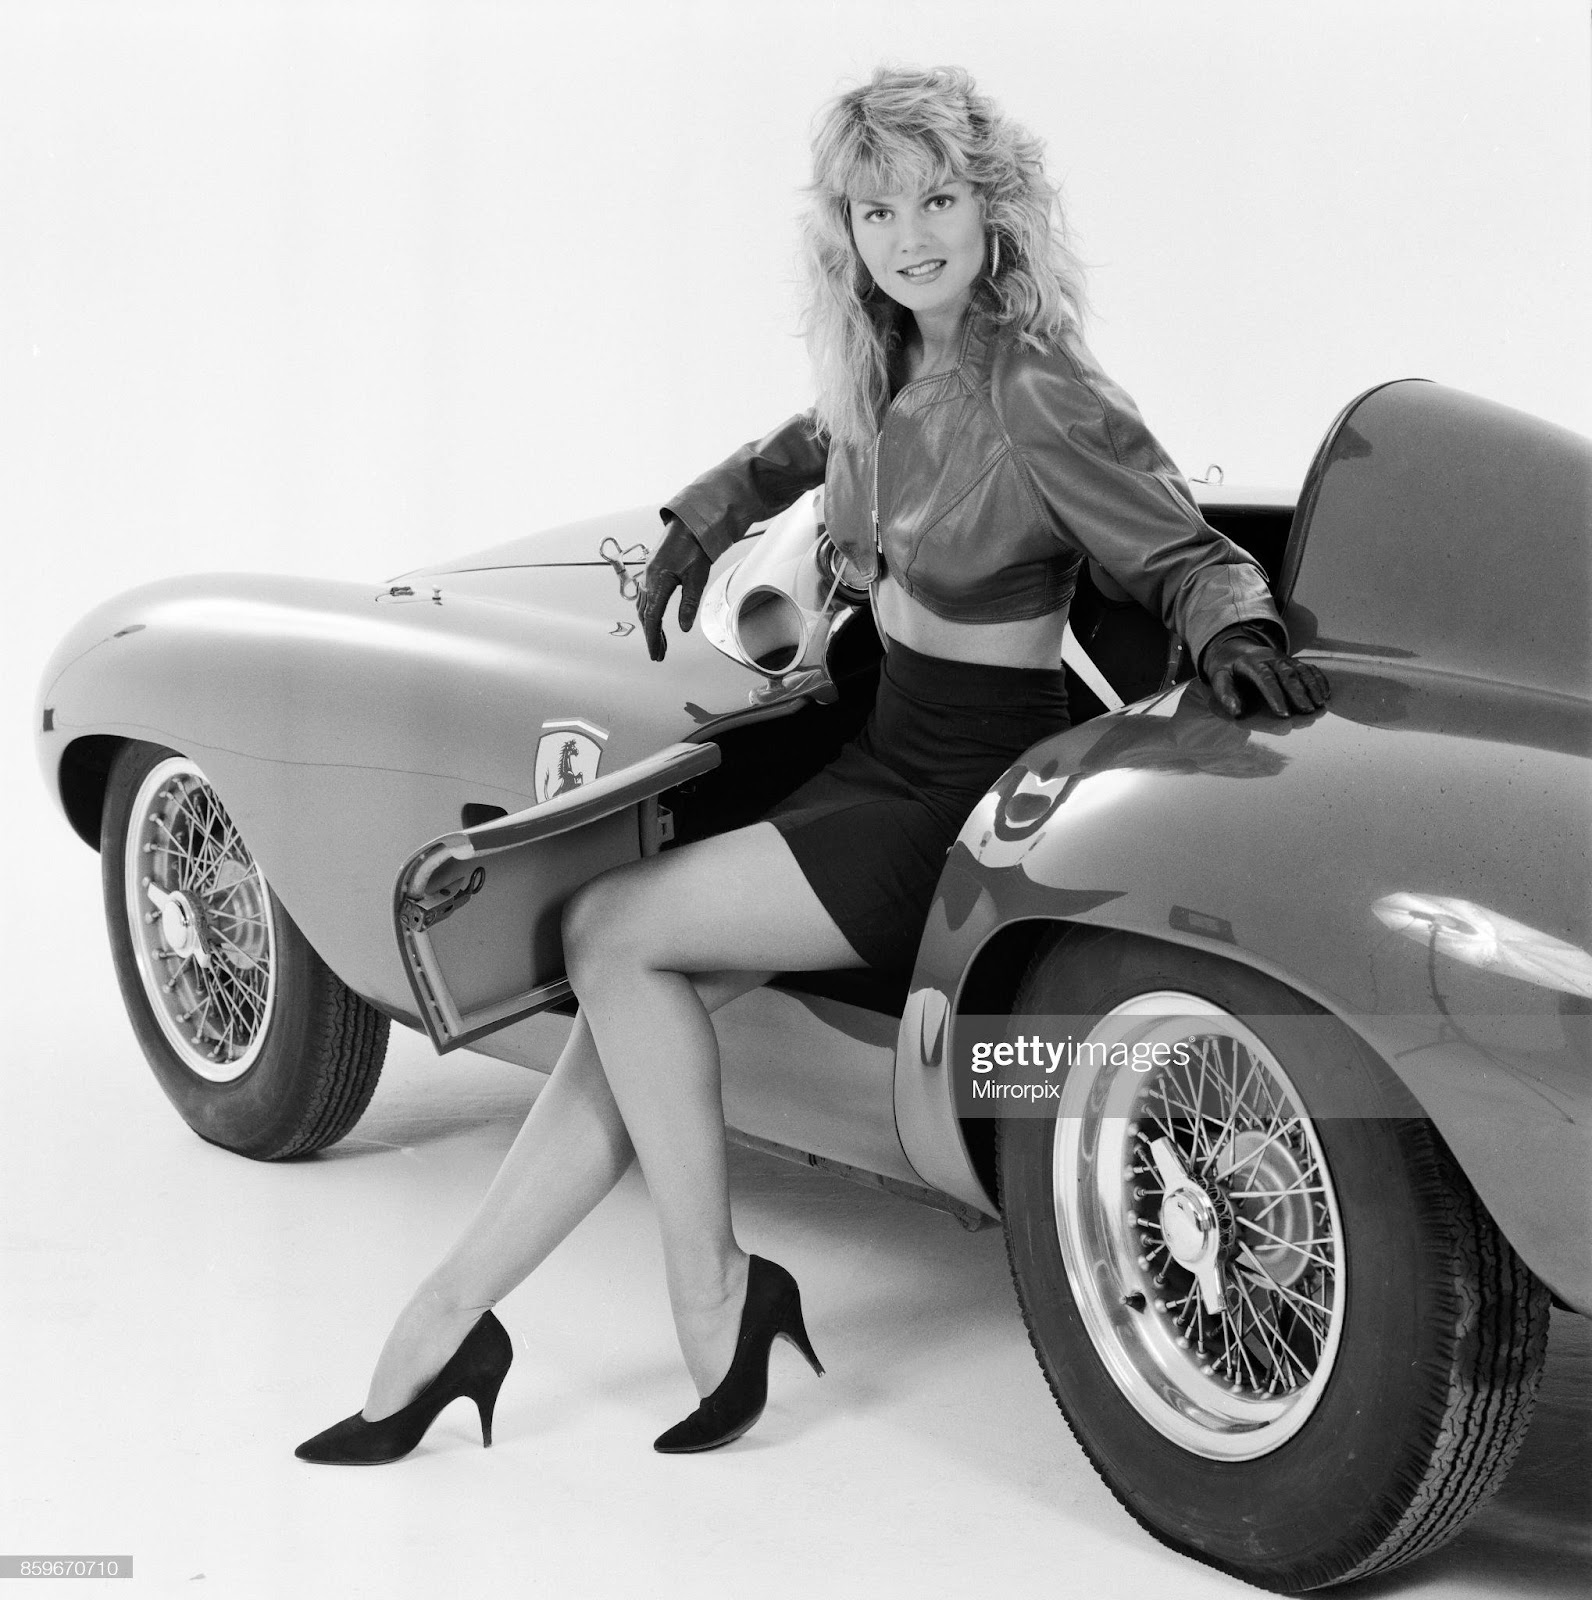 D:\Documenti\posts\posts\Women and motorsport\foto\1988\glamour-model-caroline-delahunty-poses-next-to-a-ferrari-19th-april-picture-id859670710.jpg